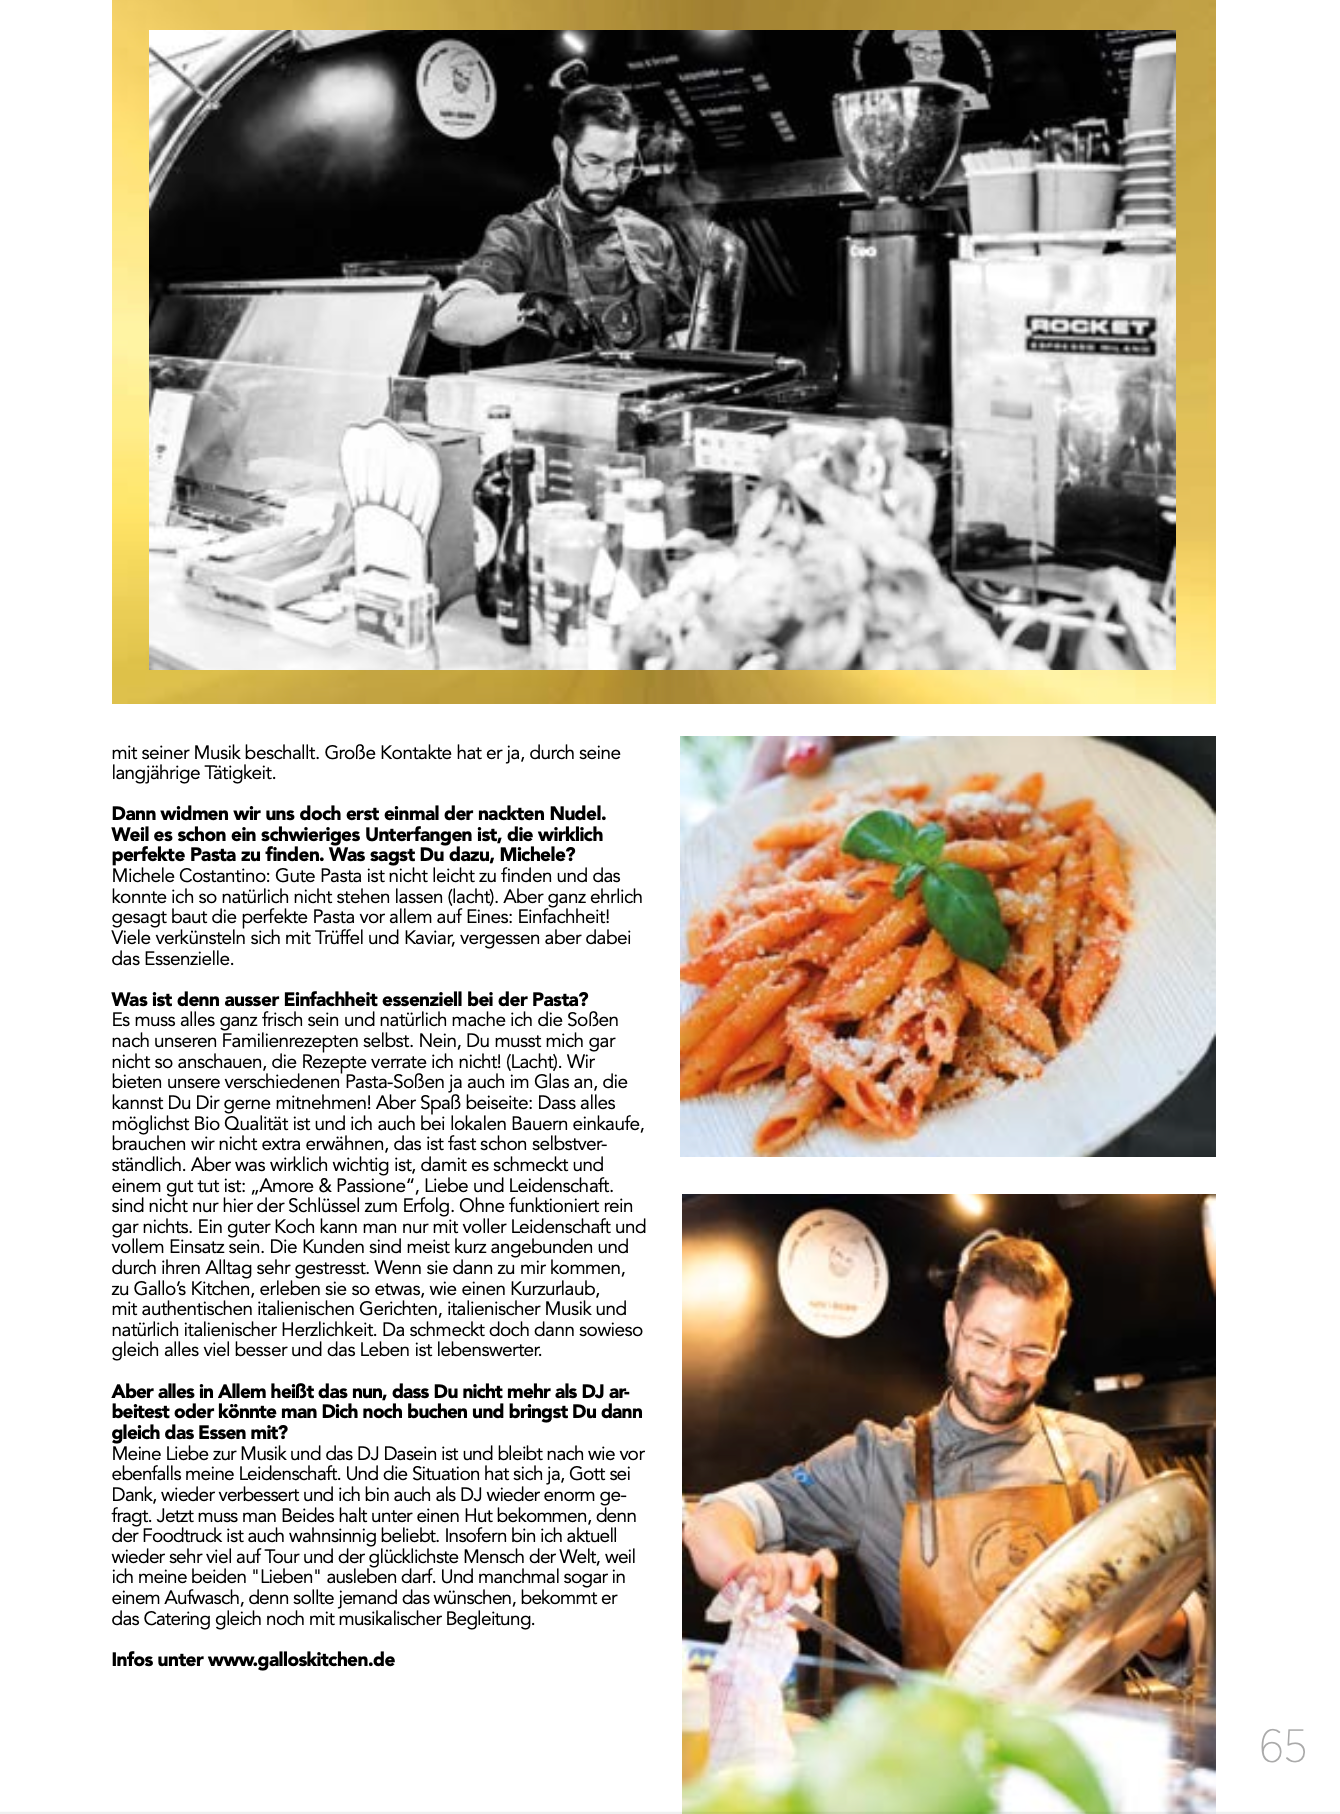 The Harbor Magazine, foodtruck, Gallo´s Kitchen, 